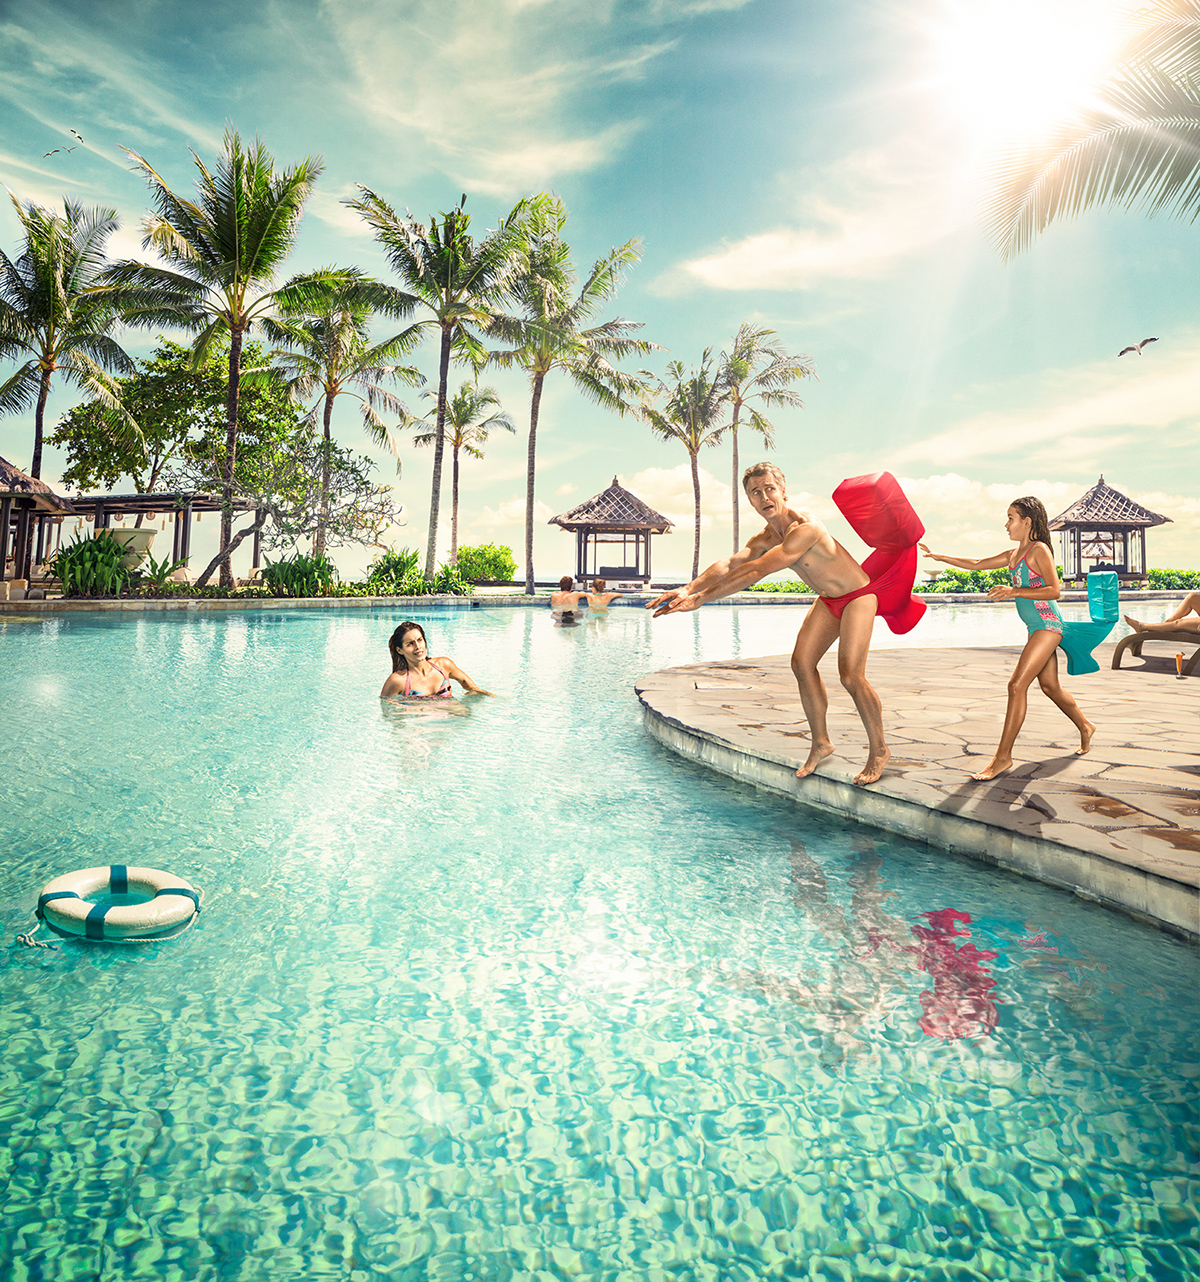 Pool ankur patar Brisbane Australia toilet family Hotel Pool stomach lagoon bikini sunbath